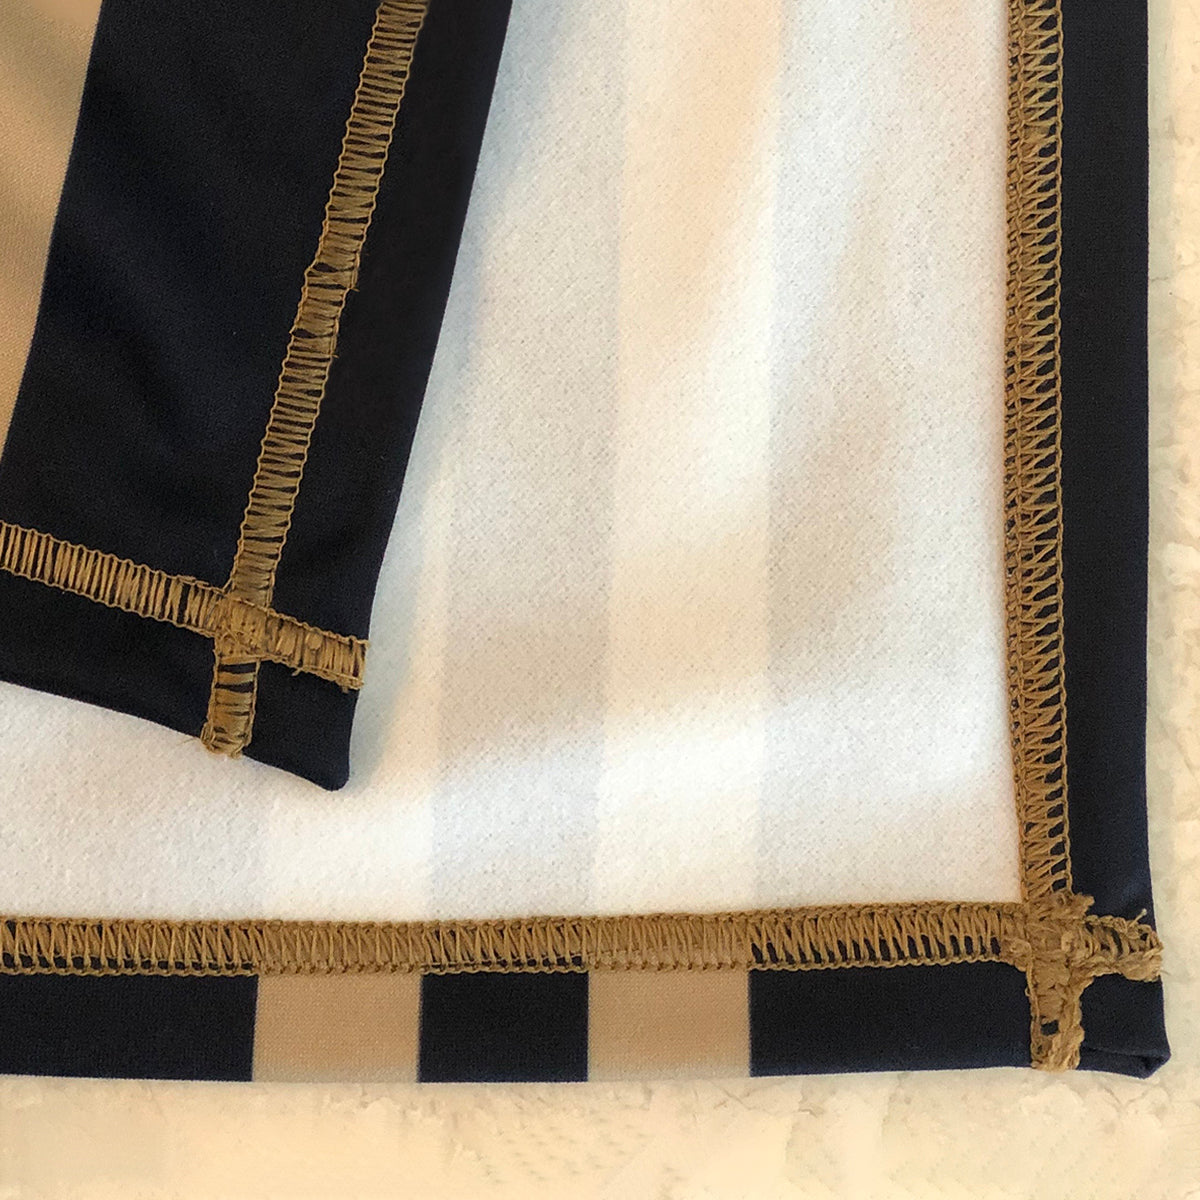 Columbus State Cougars Game Day Soft Premium Fleece Navy Throw Blanket 40 x 58 Logo and Stripes